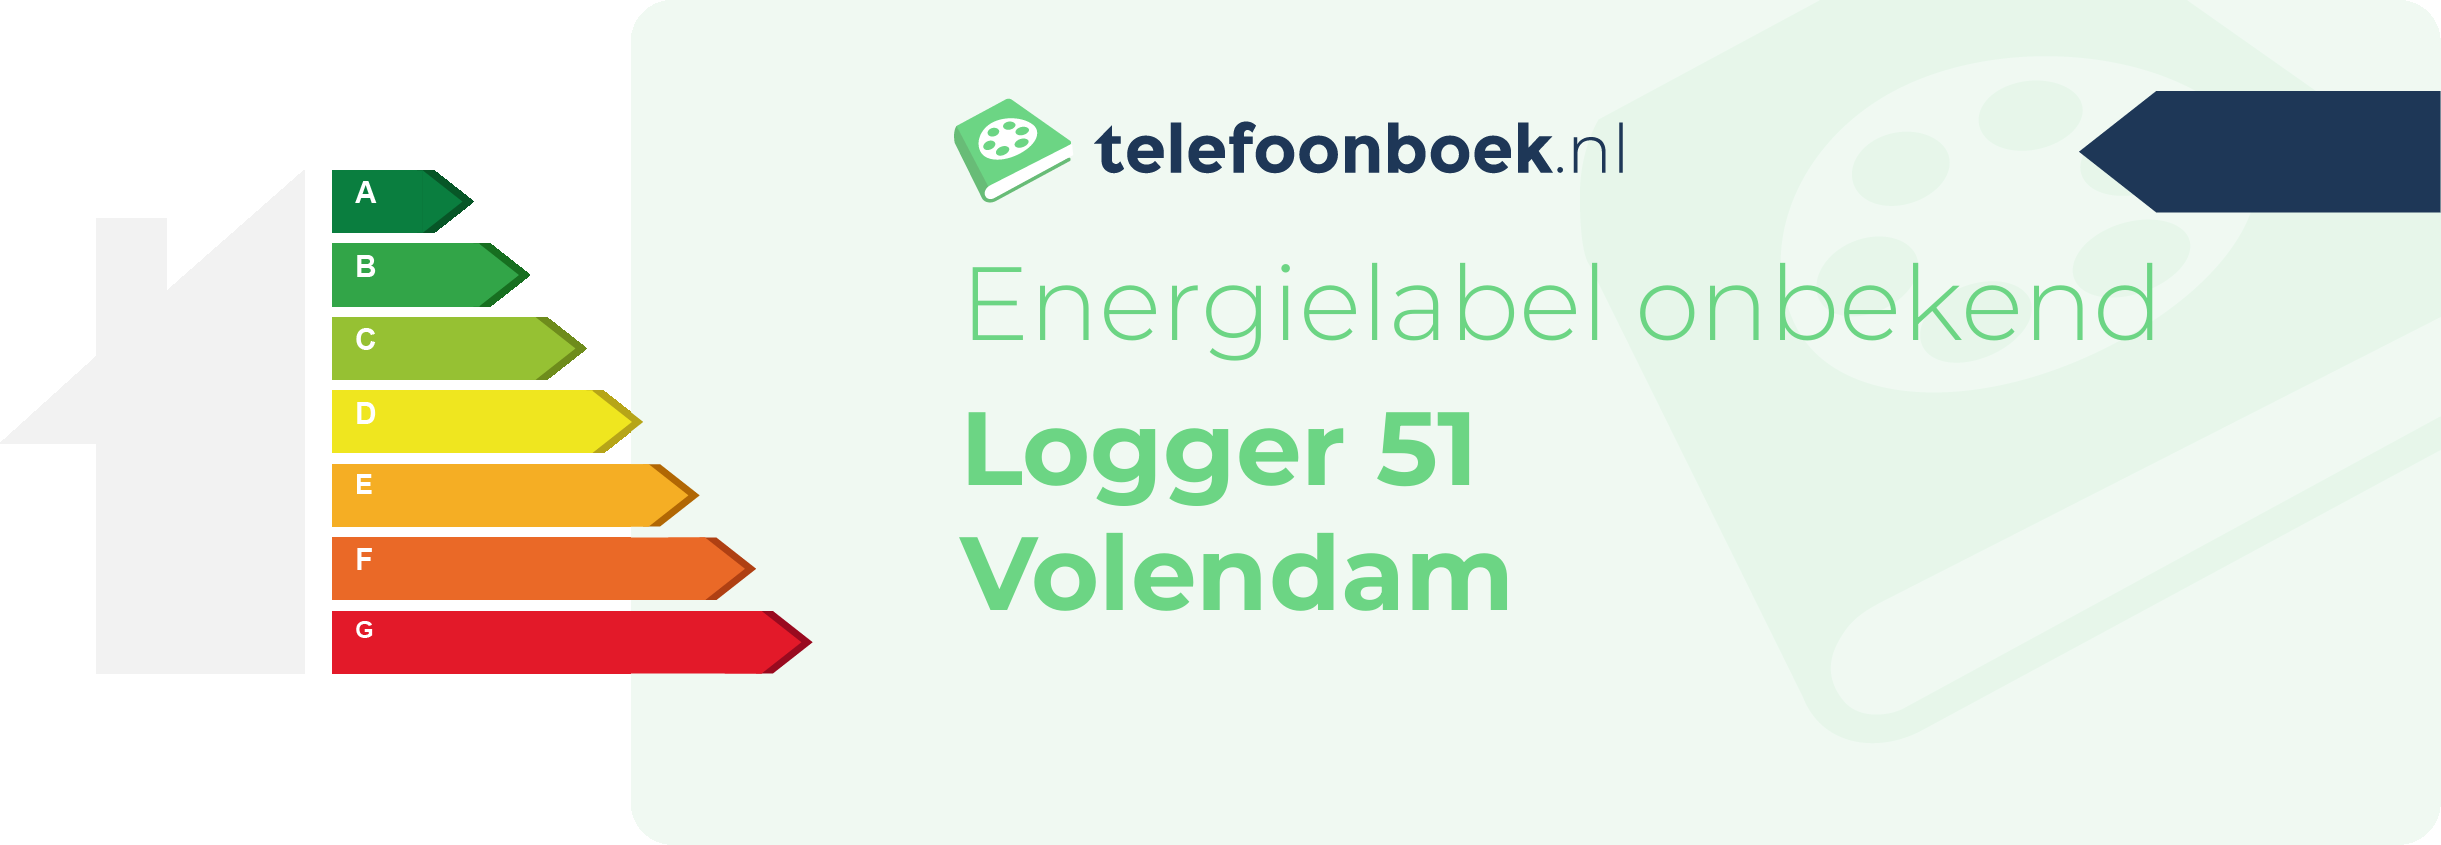 Energielabel Logger 51 Volendam